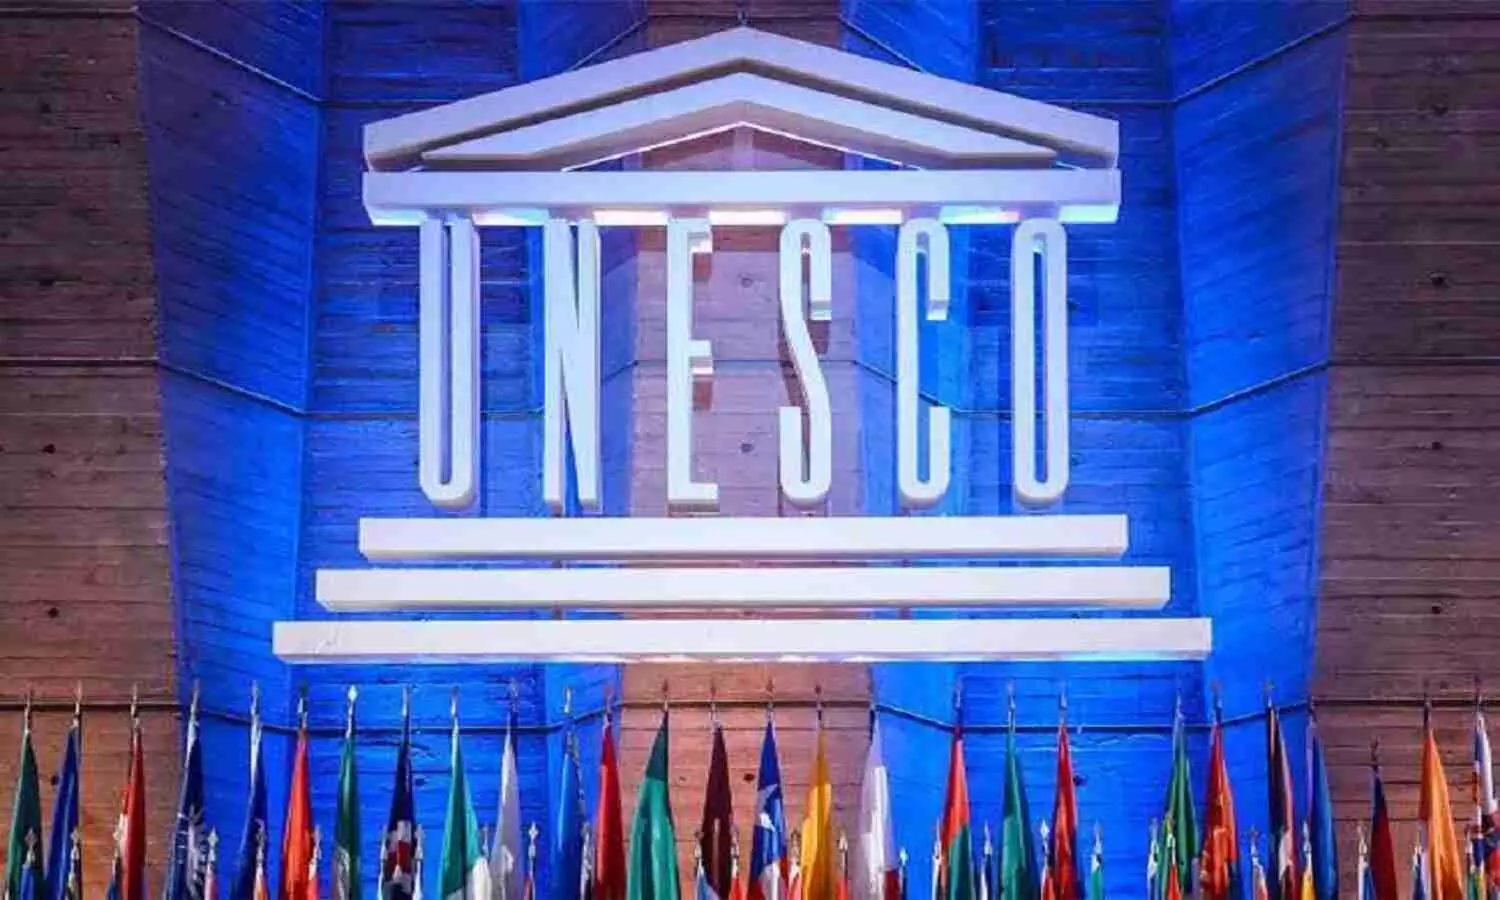 India got the chairmanship of UNESCO